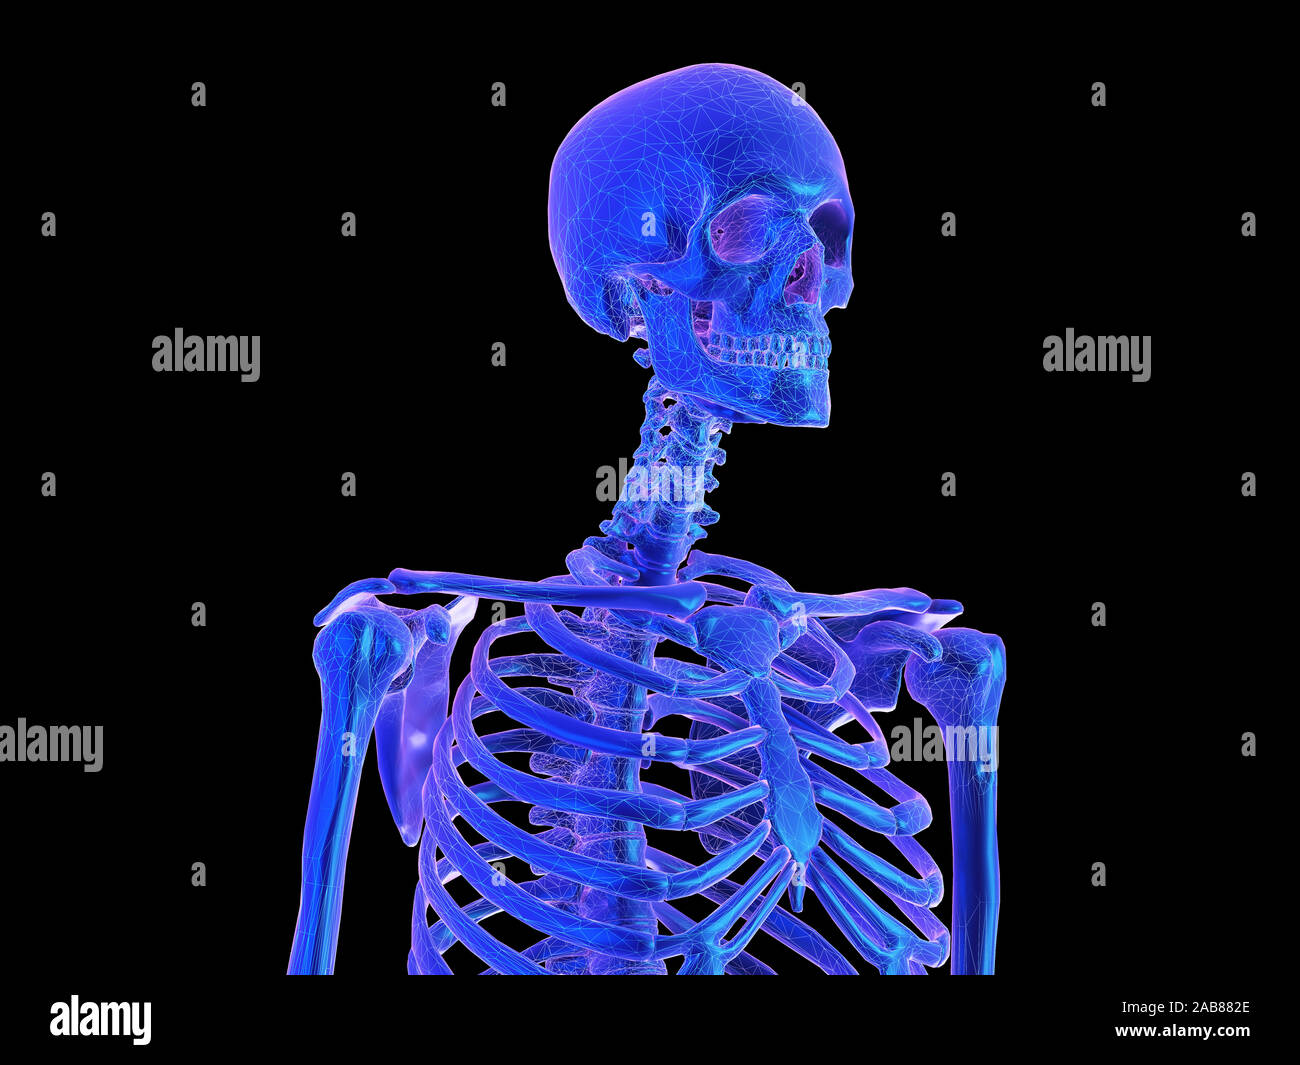 Rendu 3D abstract style synthwave illustration d'un squelette humain Banque D'Images